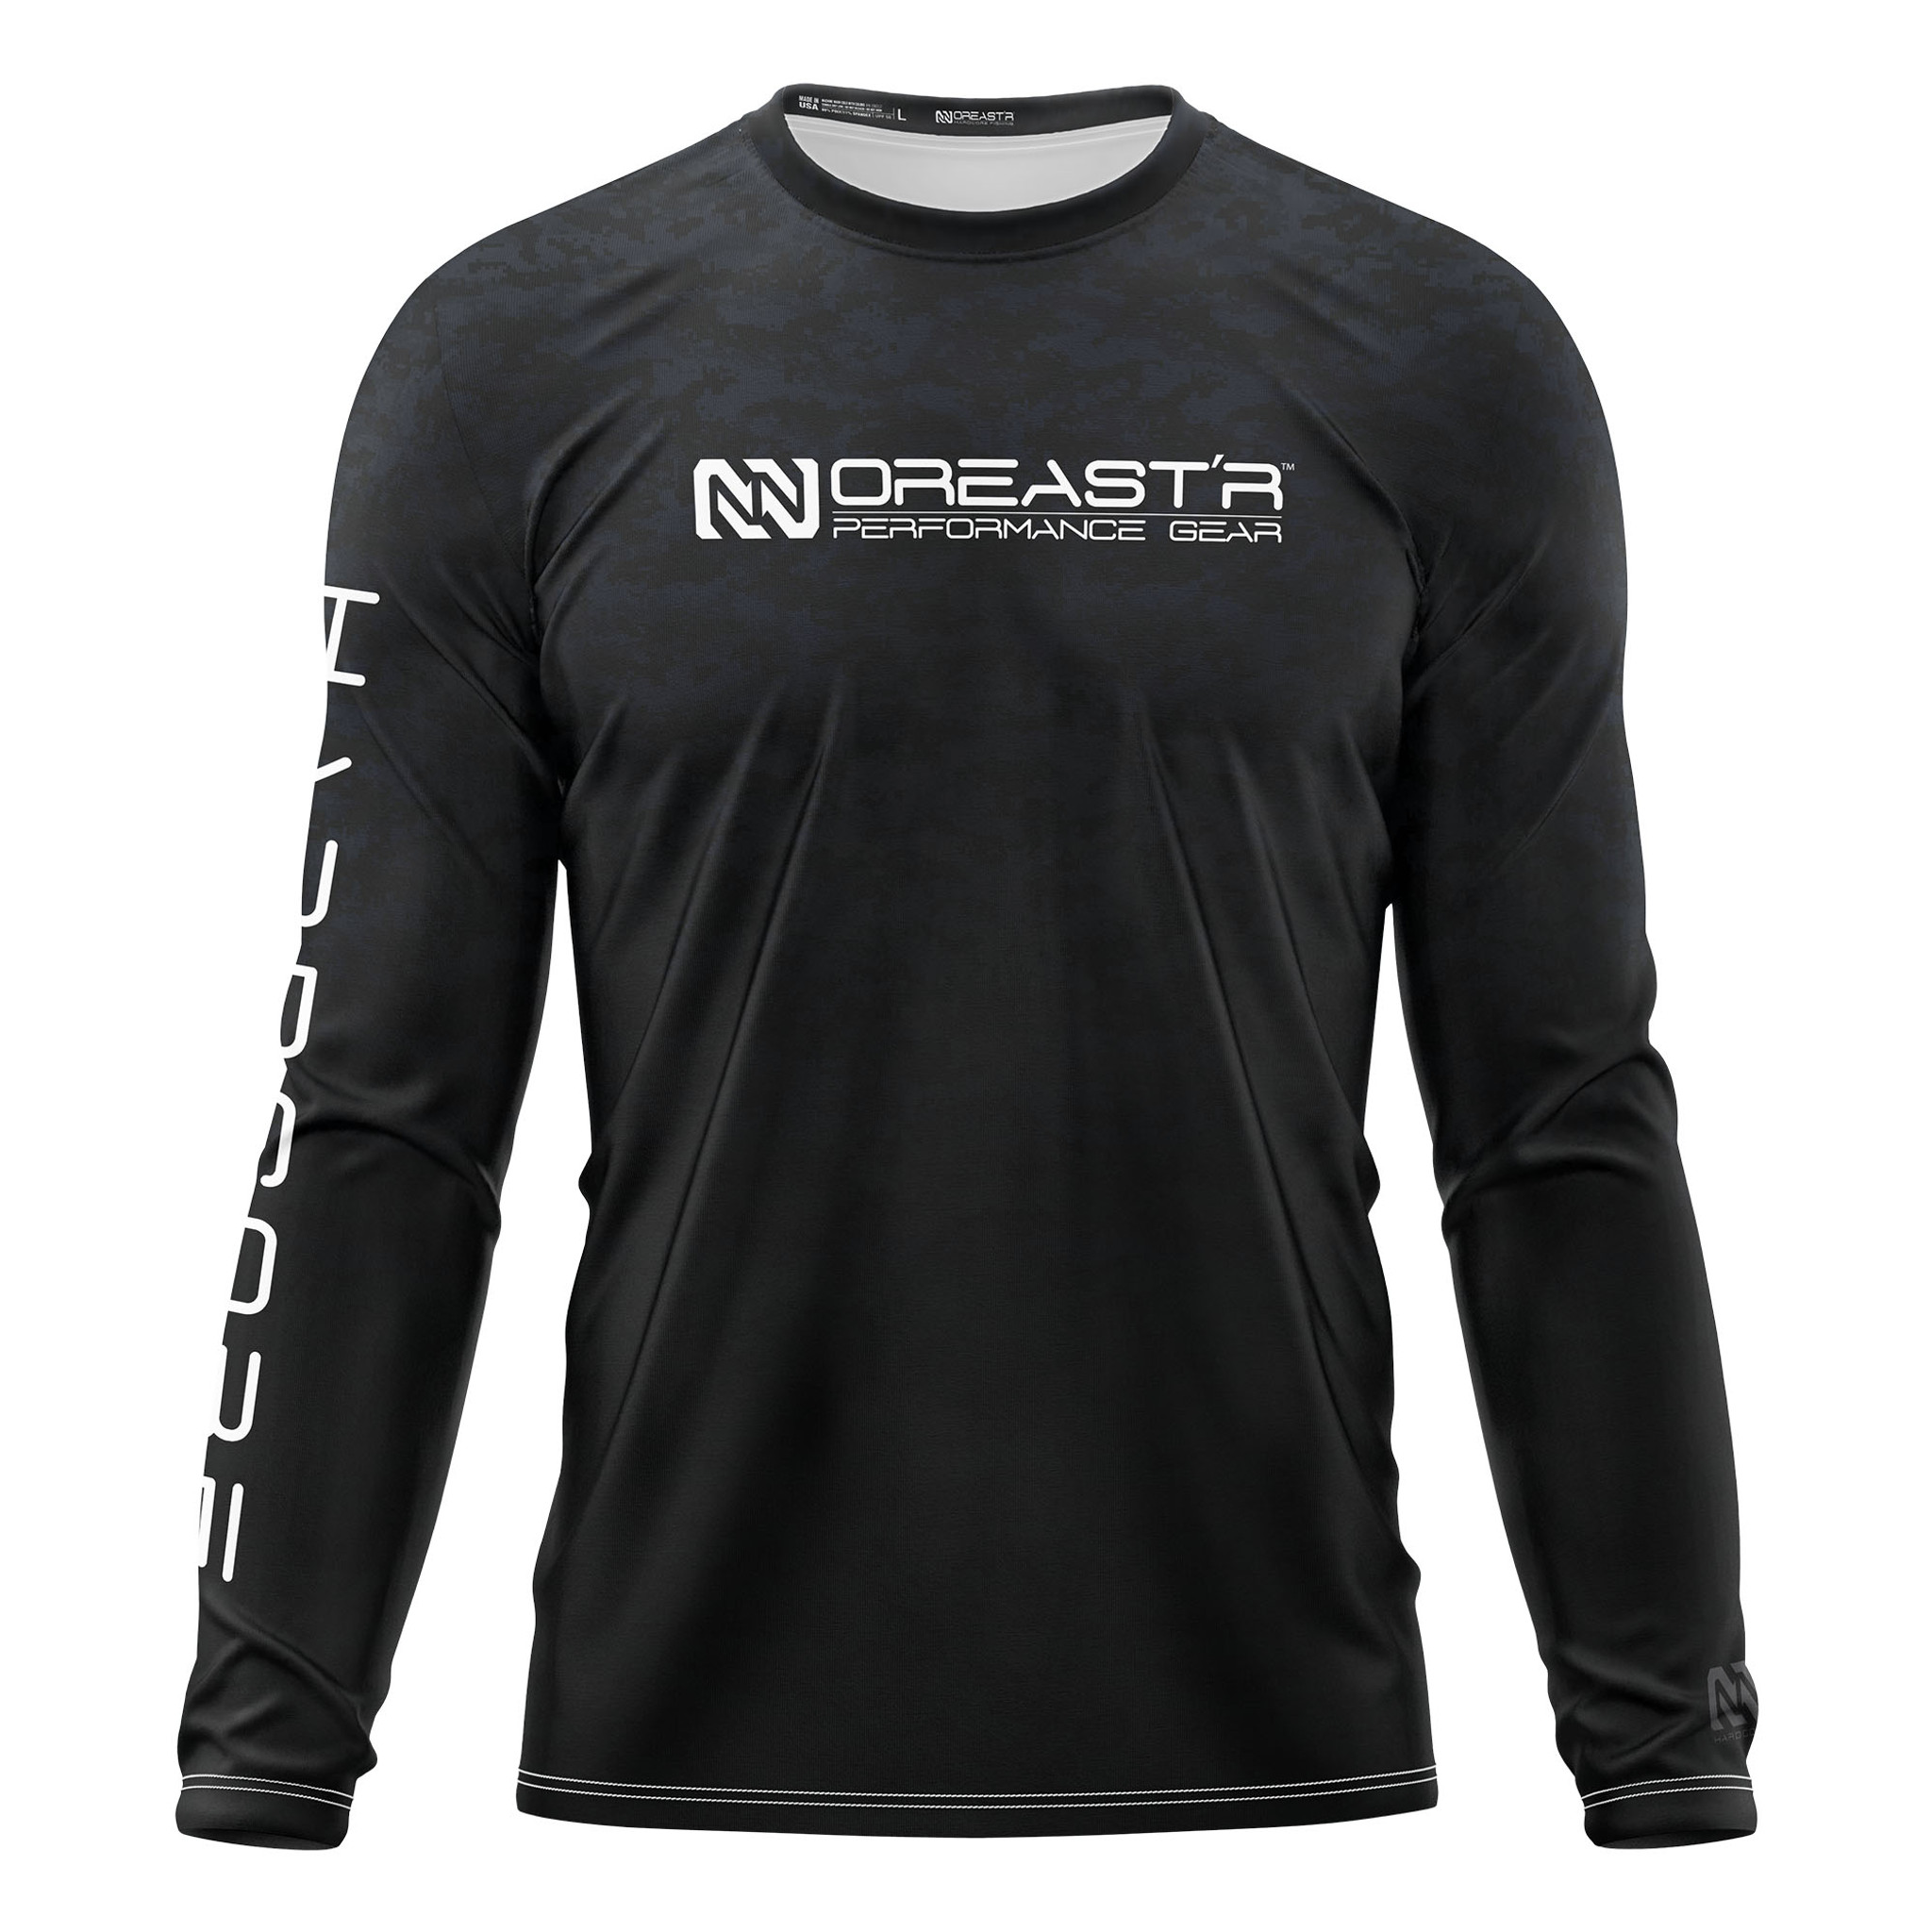 NOREAST'R American Eagle - UPF 50 Long Sleeve Performance Gear Shirt